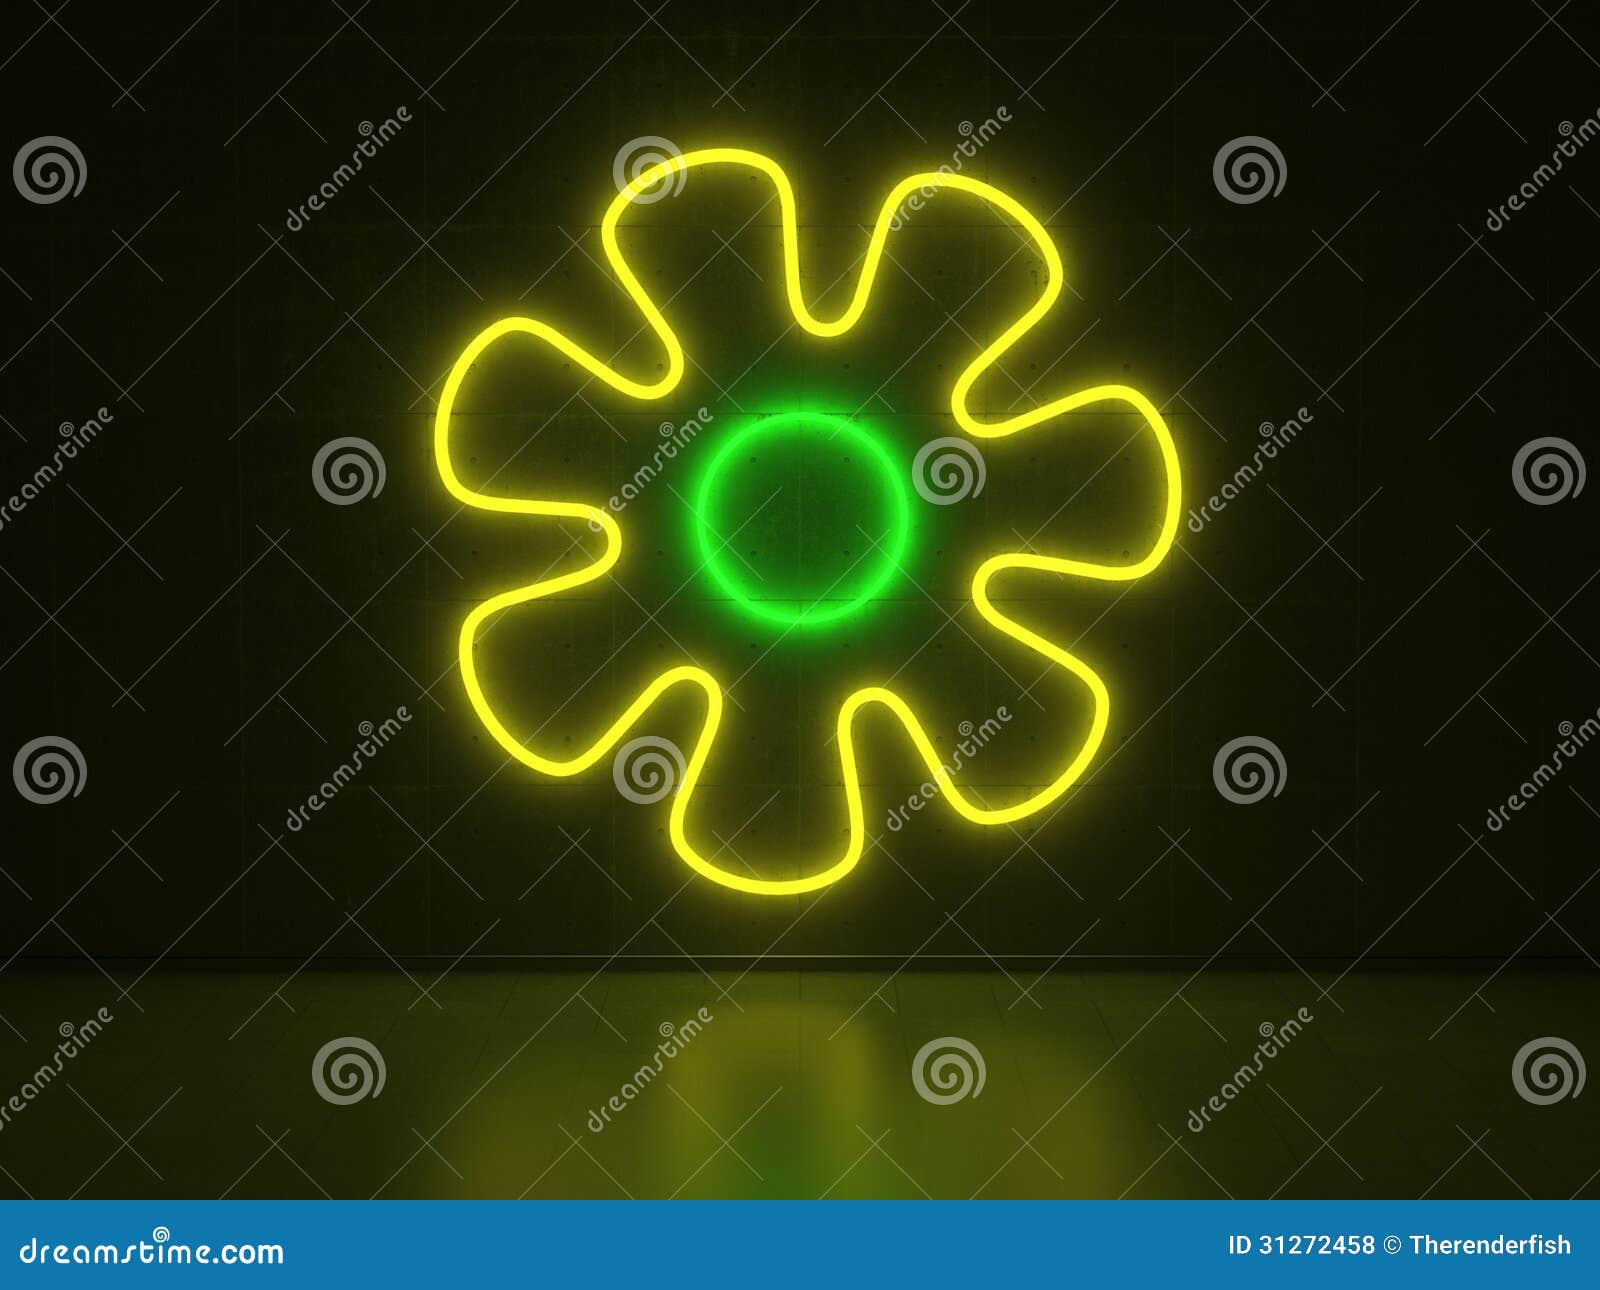 Flower - Series Neon Signs stock illustration. Illustration of ...